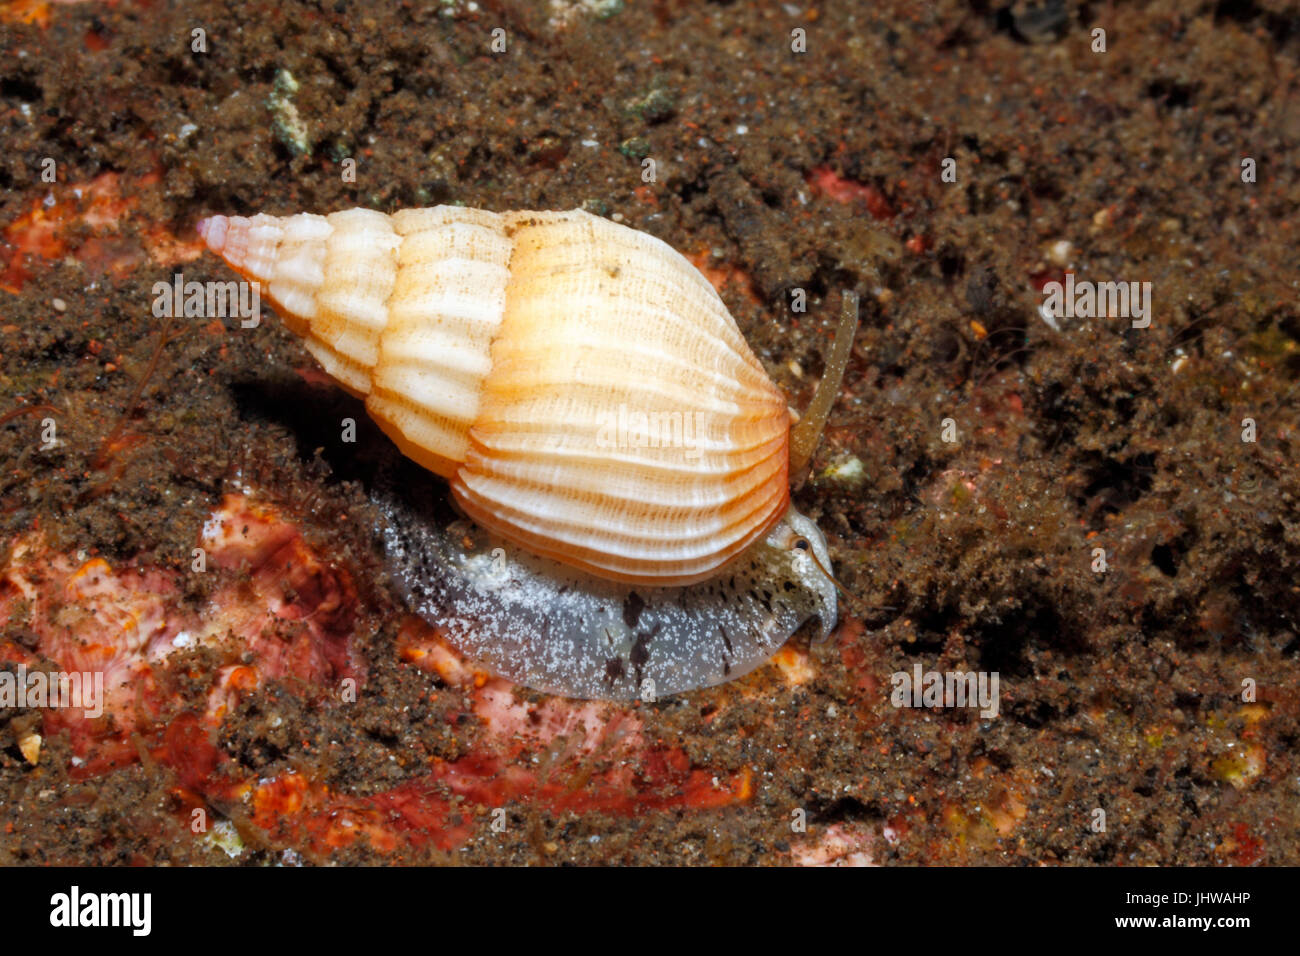 Caracol marino fotografías e imágenes de alta resolución - Alamy